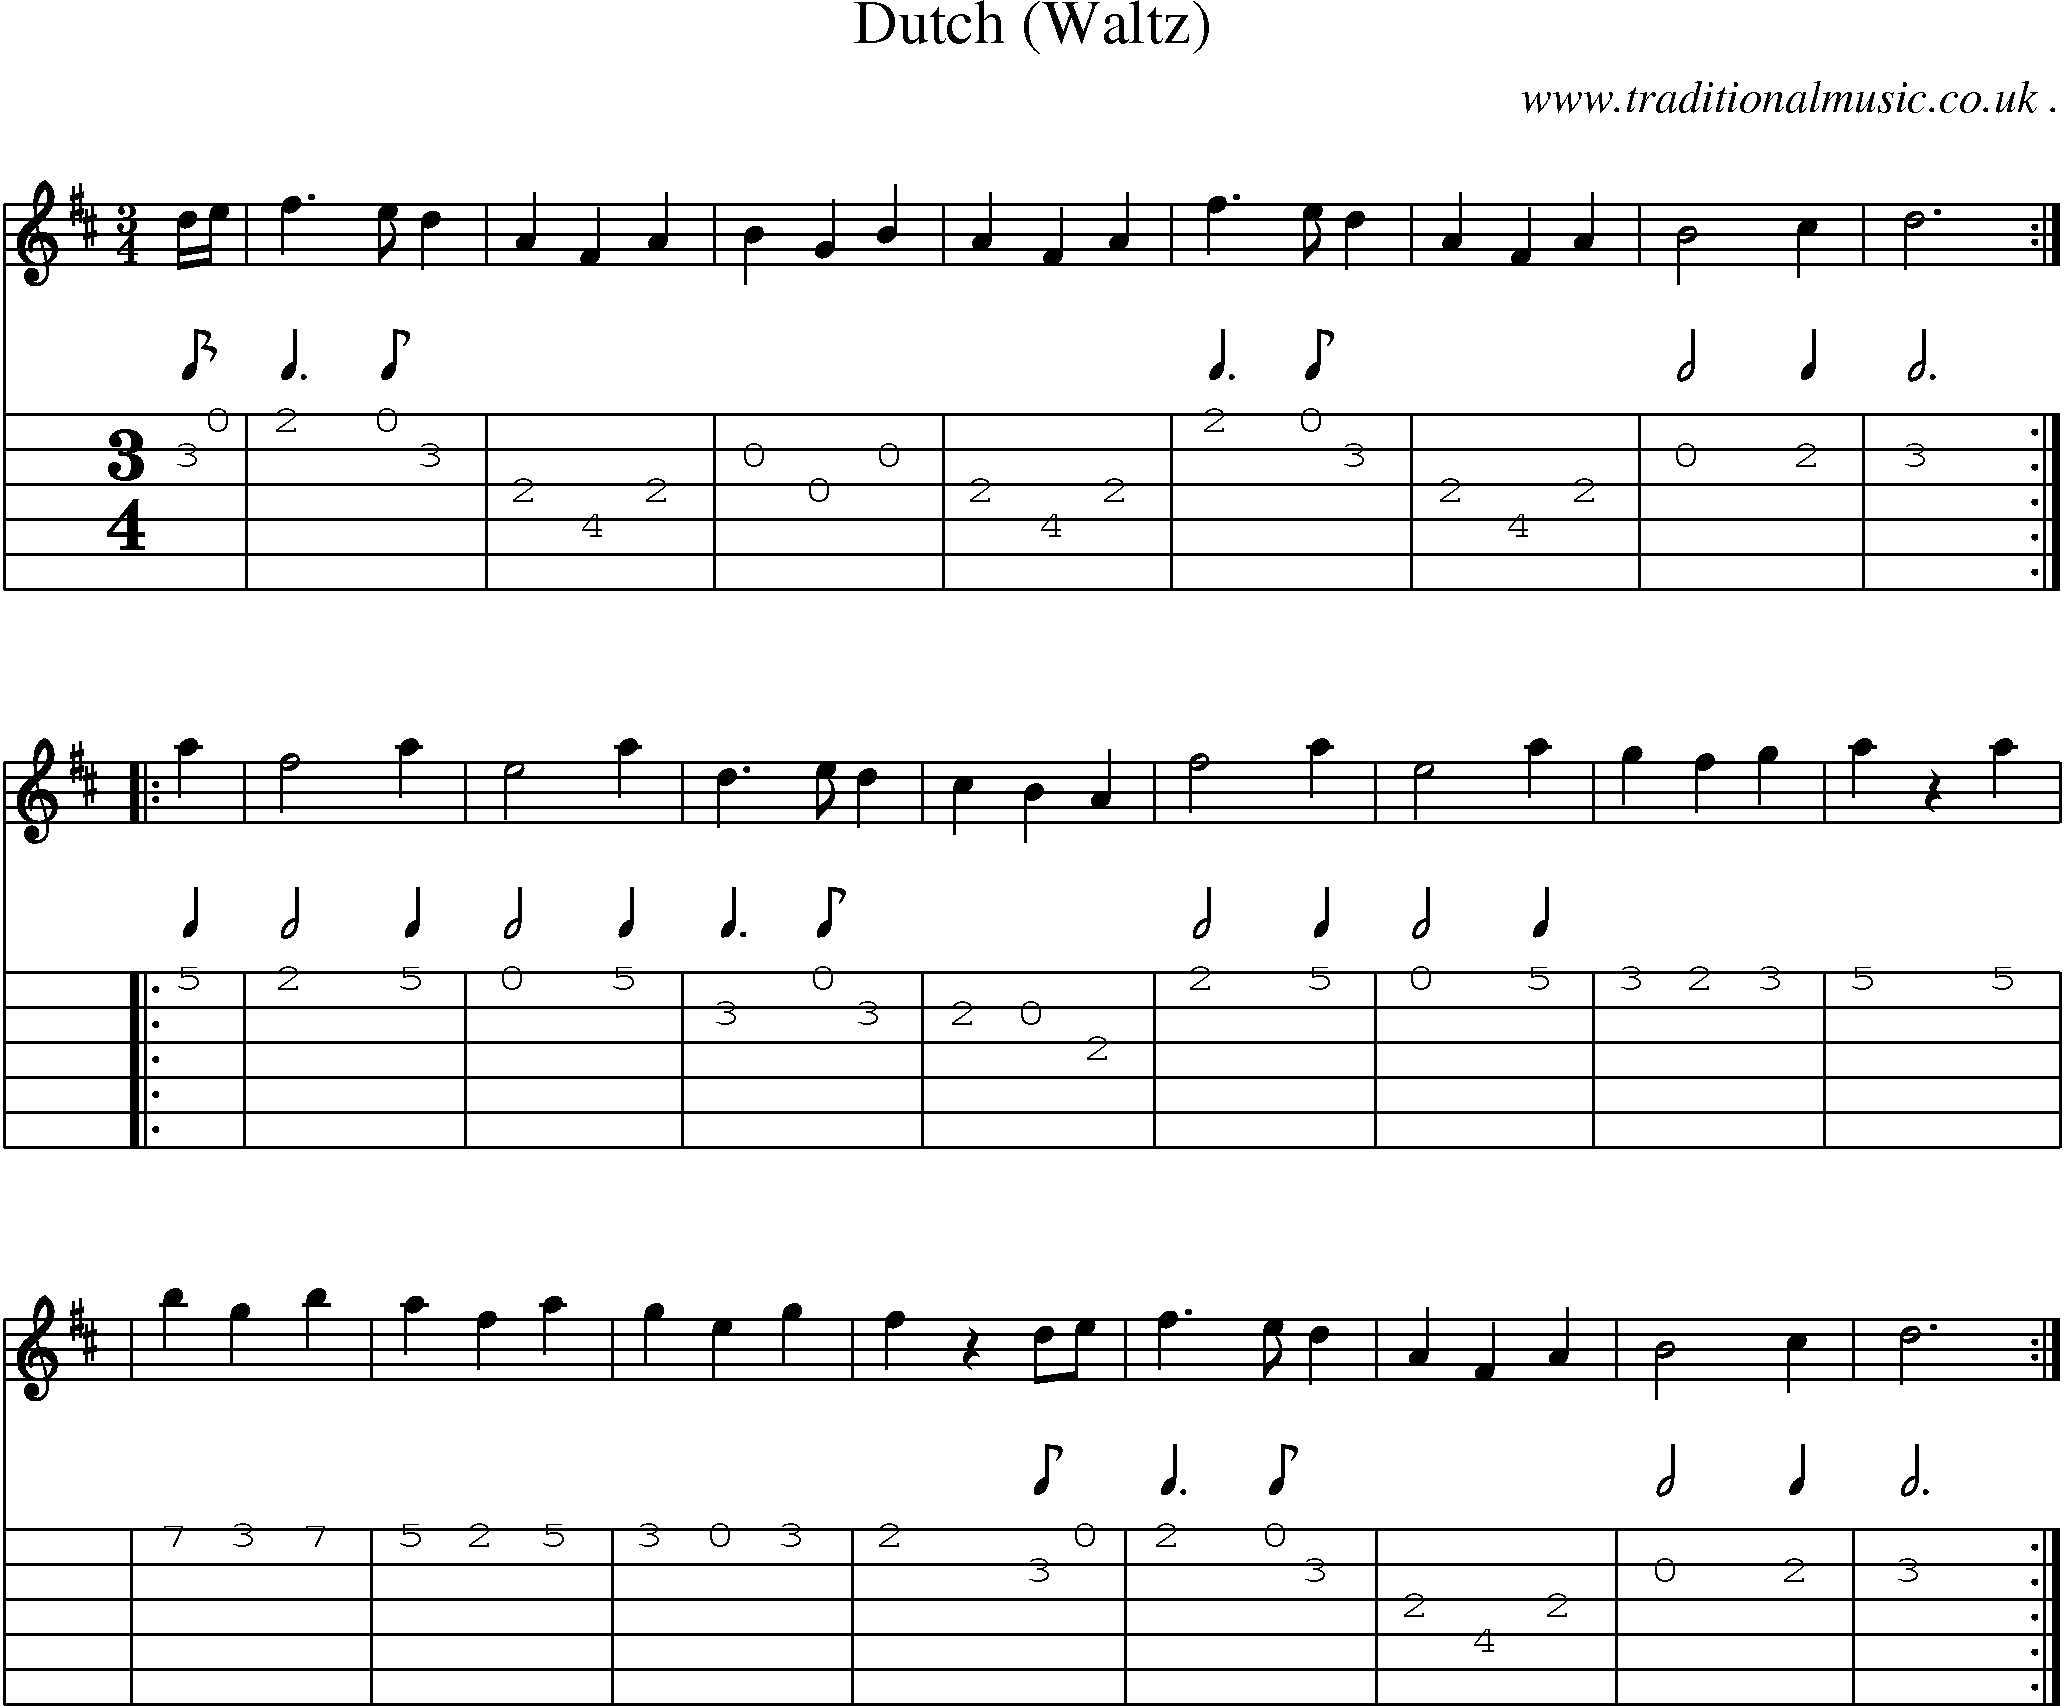 Sheet-music  score, Chords and Guitar Tabs for Dutch Waltz